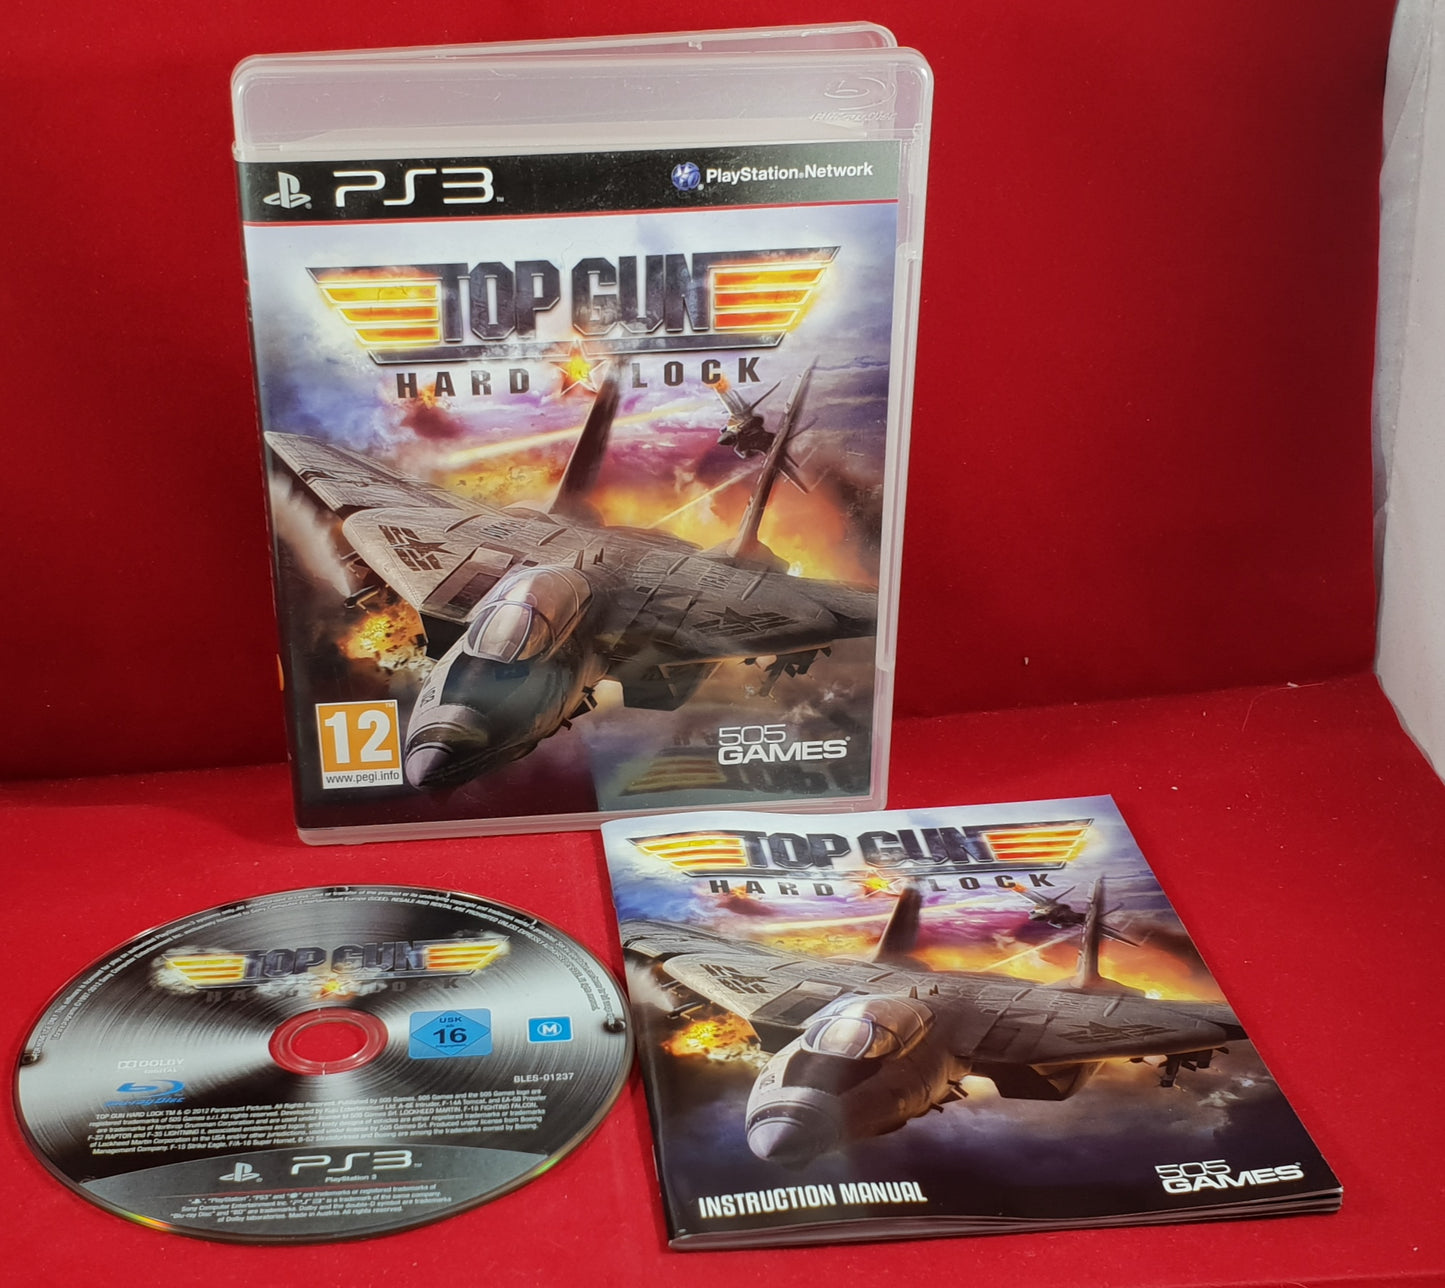 Top Gun Hard Lock Sony Playstation 3 (PS3) Game